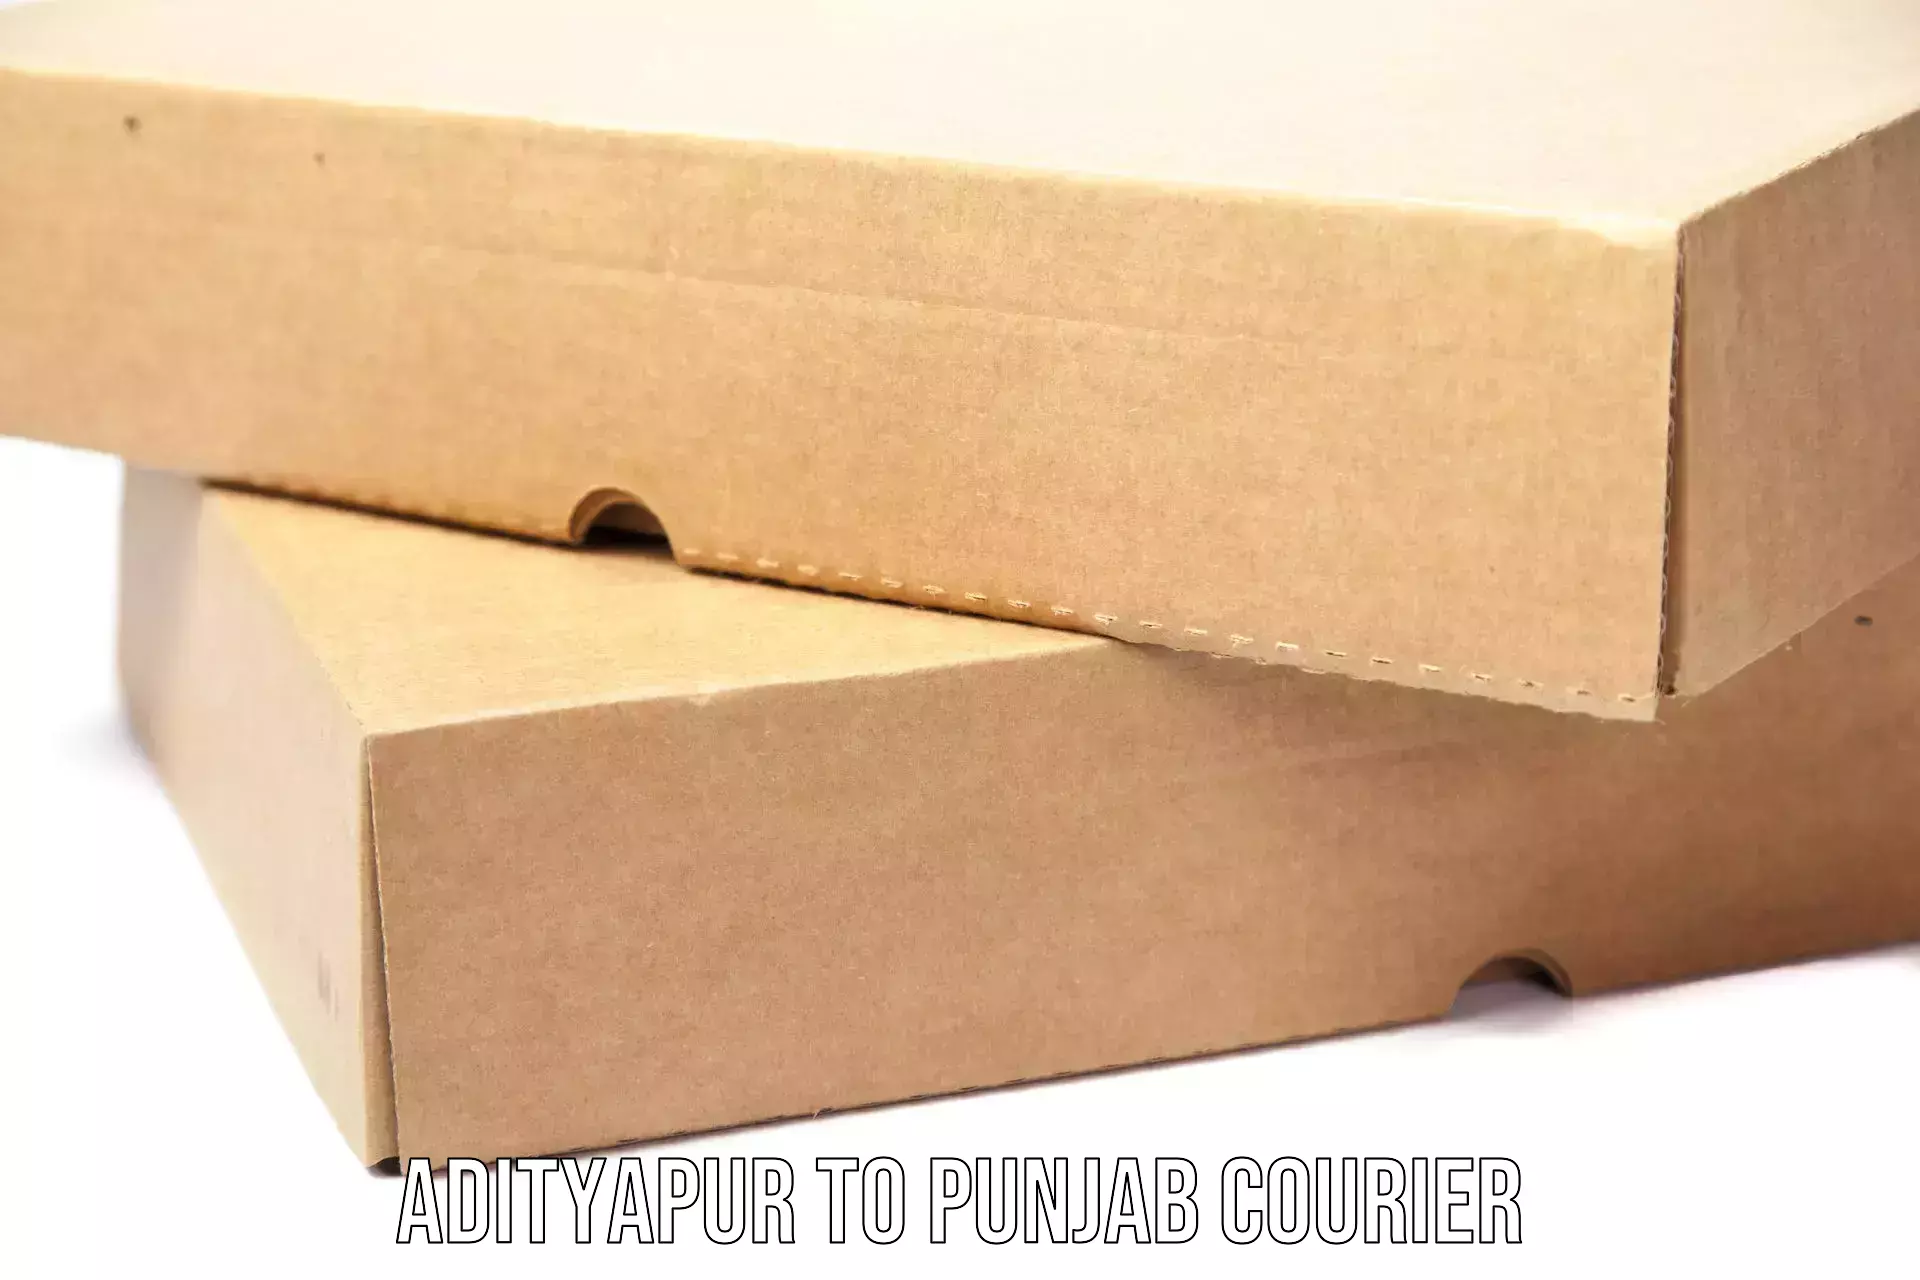 High-capacity parcel service Adityapur to Punjab